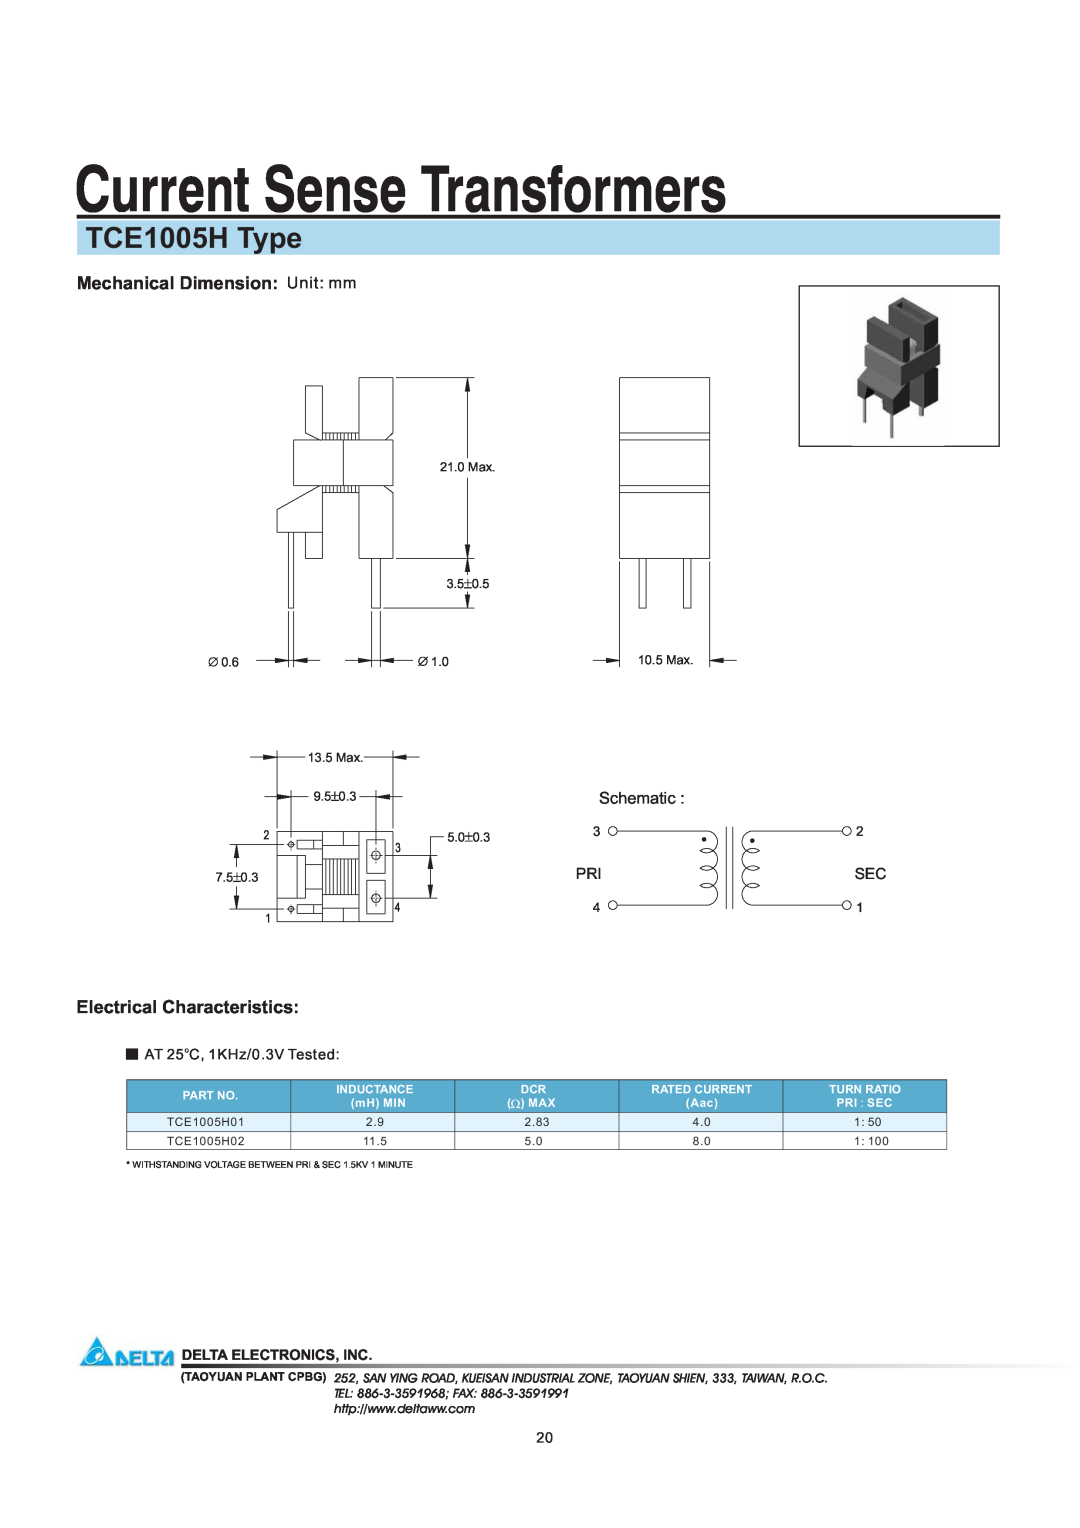 Delta Electronics manual Current Sense Transformers, TCE1005H Type, Mechanical Dimension Unit mm, Schematic, Max 3.50.5 